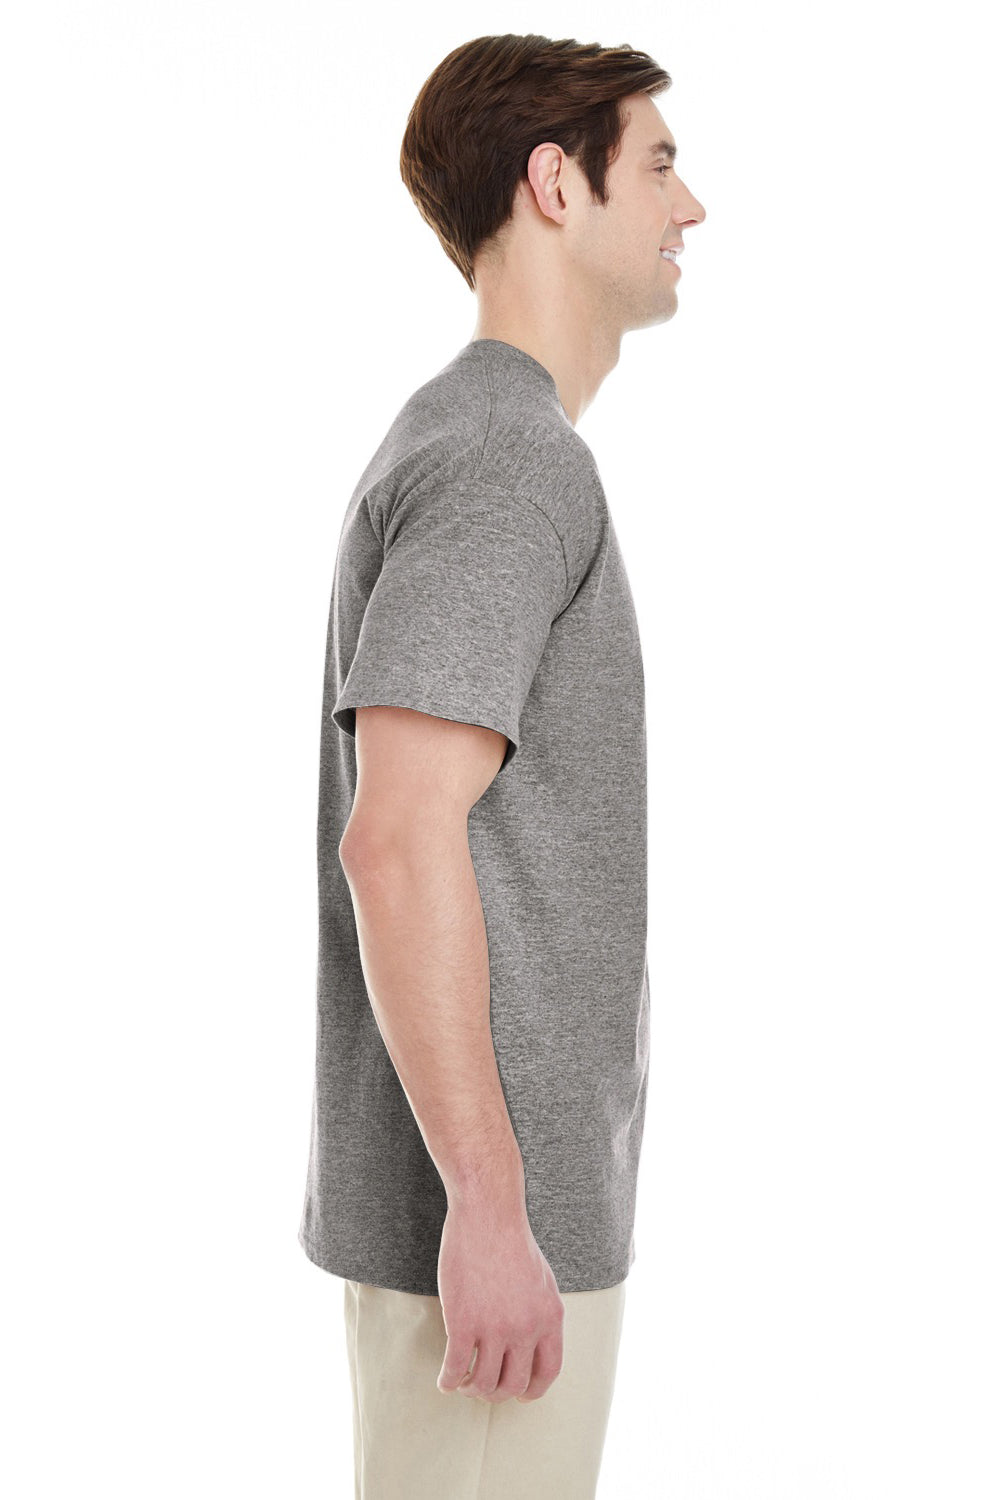 Gildan G530 Mens Short Sleeve Crewneck T-Shirt w/ Pocket Heather Graphite Grey Side